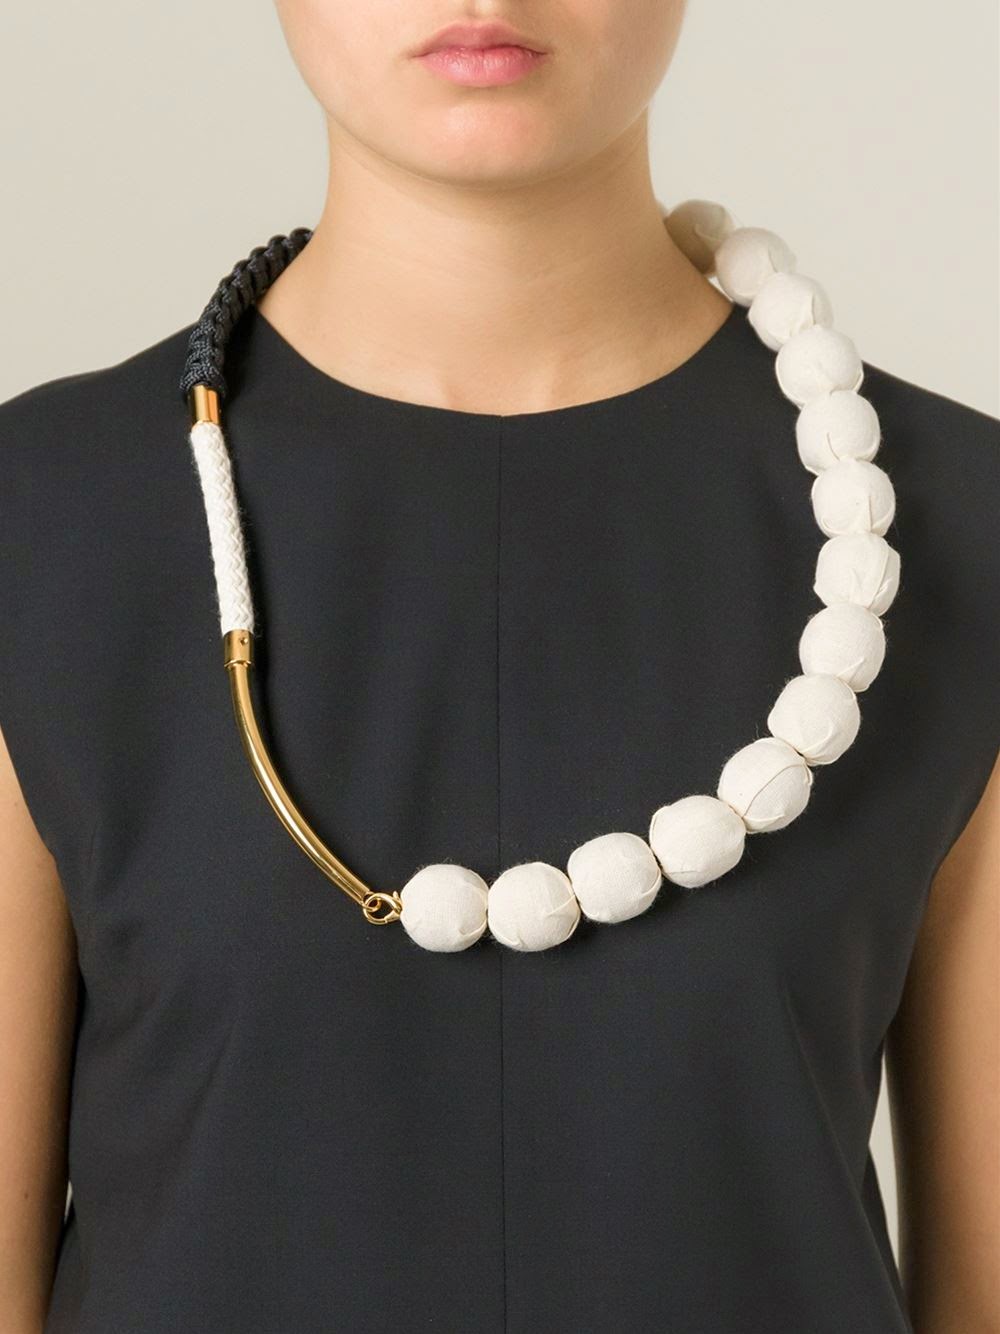 http://www.farfetch.com/tw/shopping/women/marni-contrasting-panel-necklace-item-10986068.aspx?storeid=9475&ffref=lp_27_